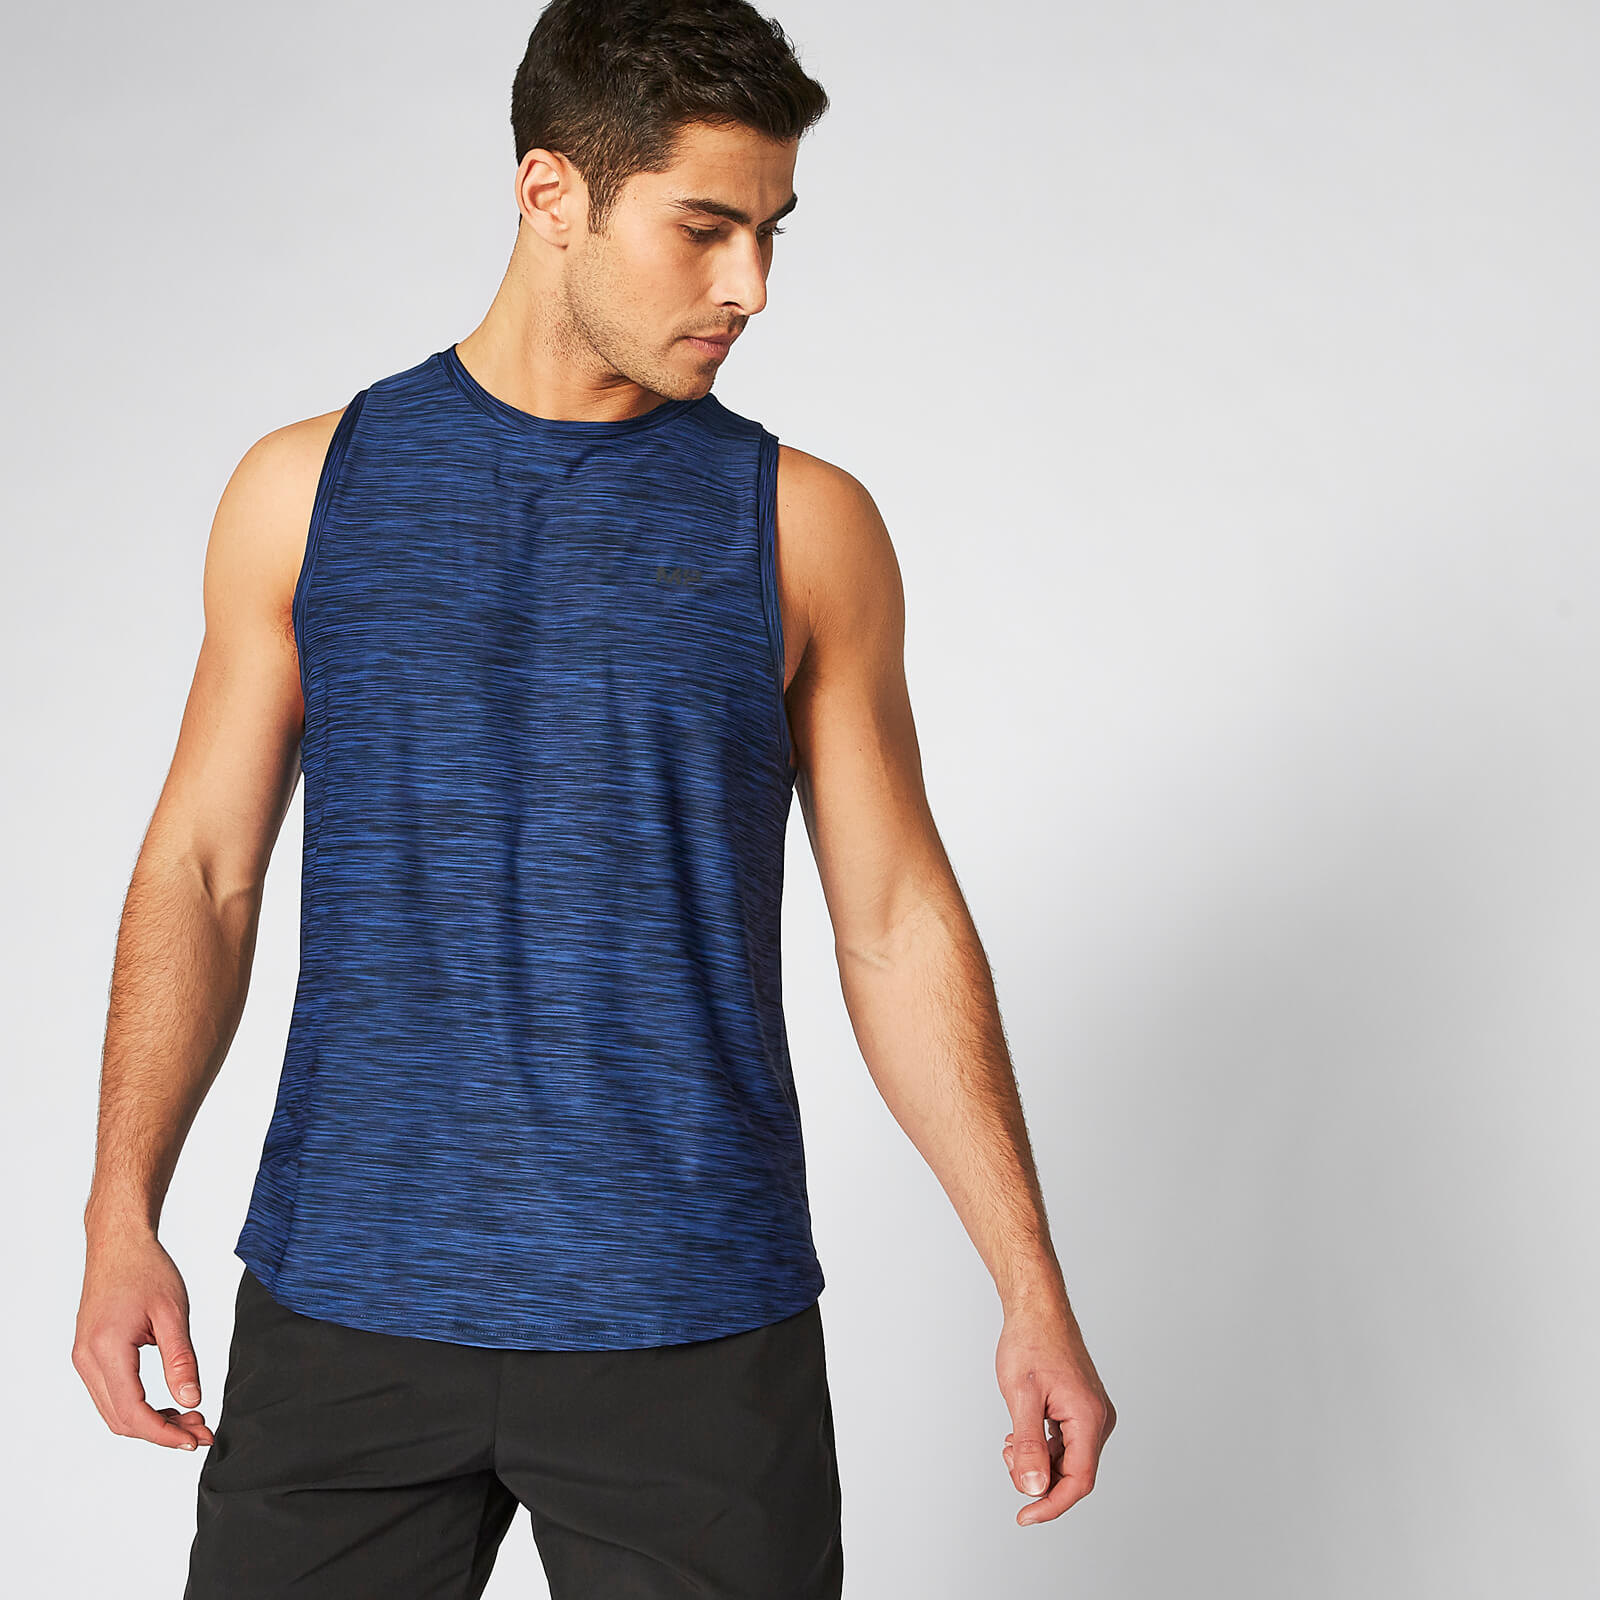 Dry-Tech Infinity majica bez rukava - Plava